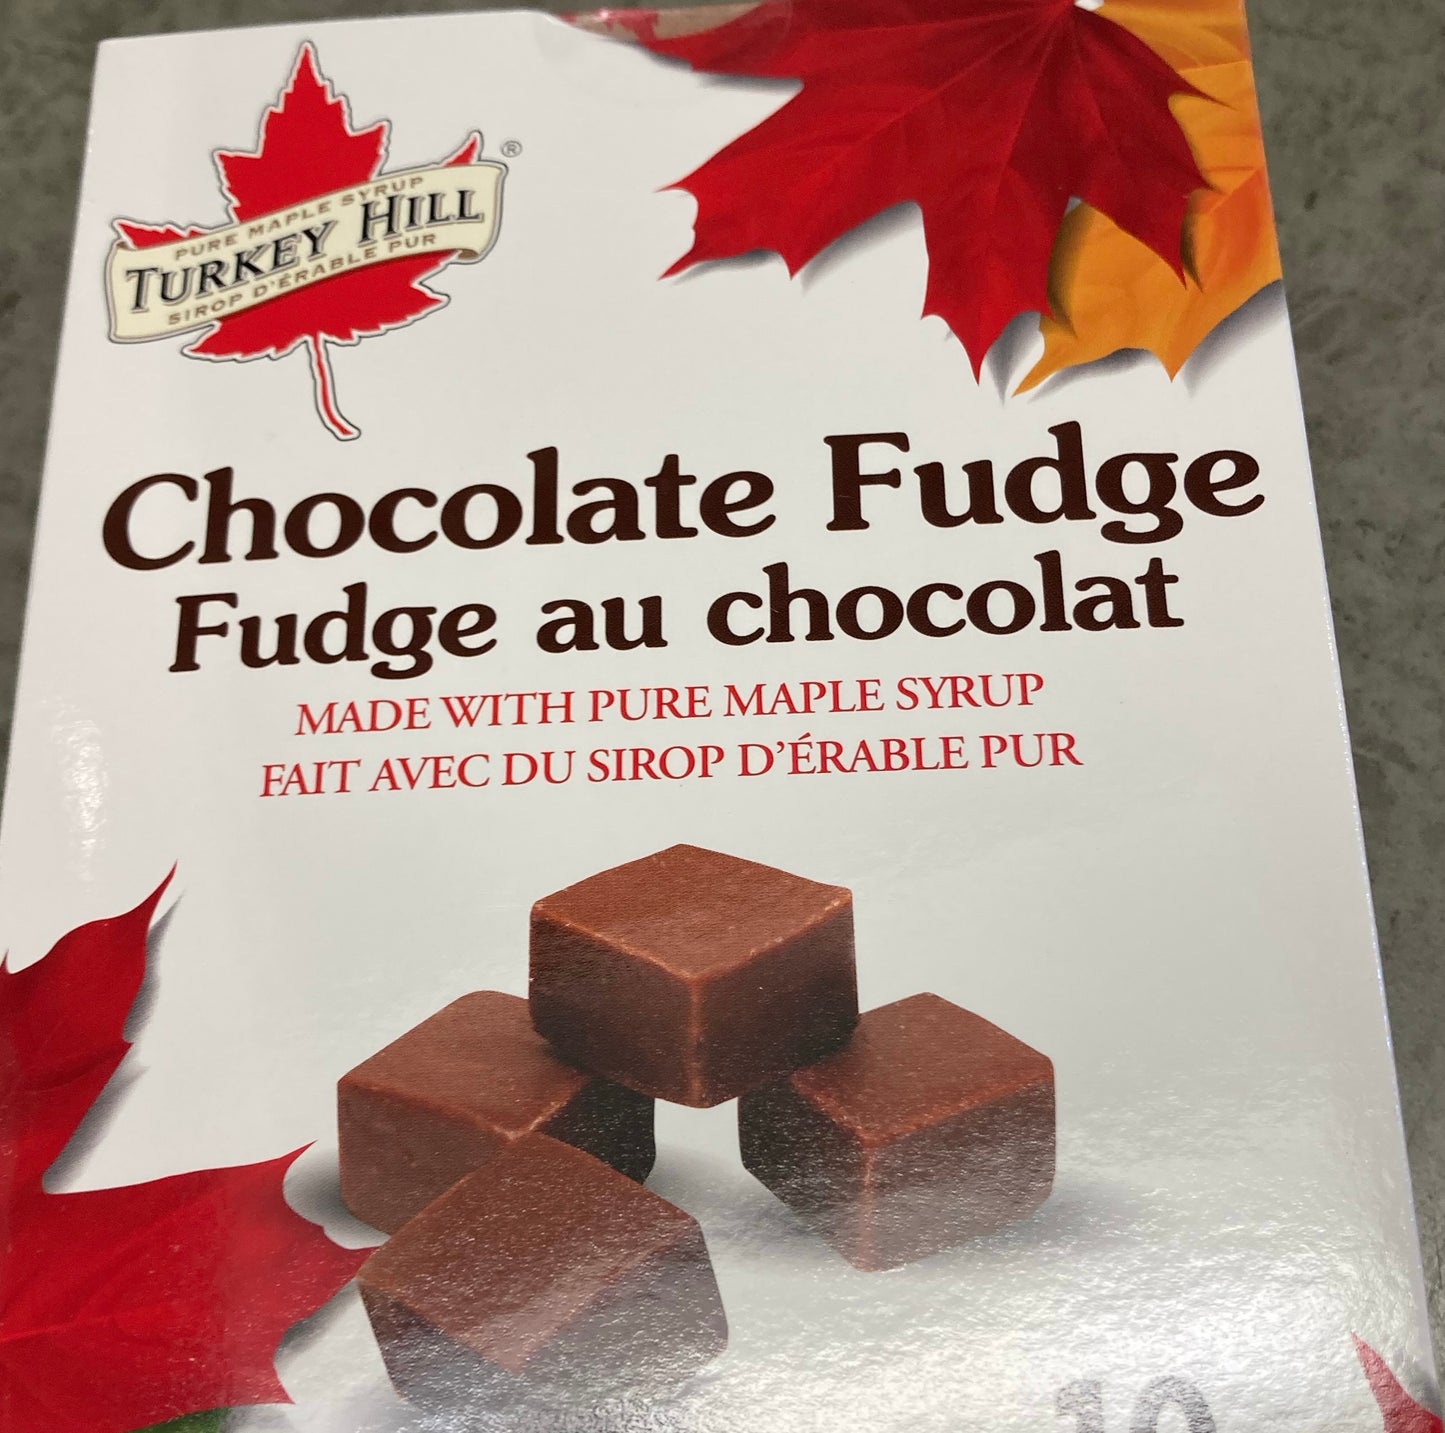 Turkey Hill - Chocolate Fudge